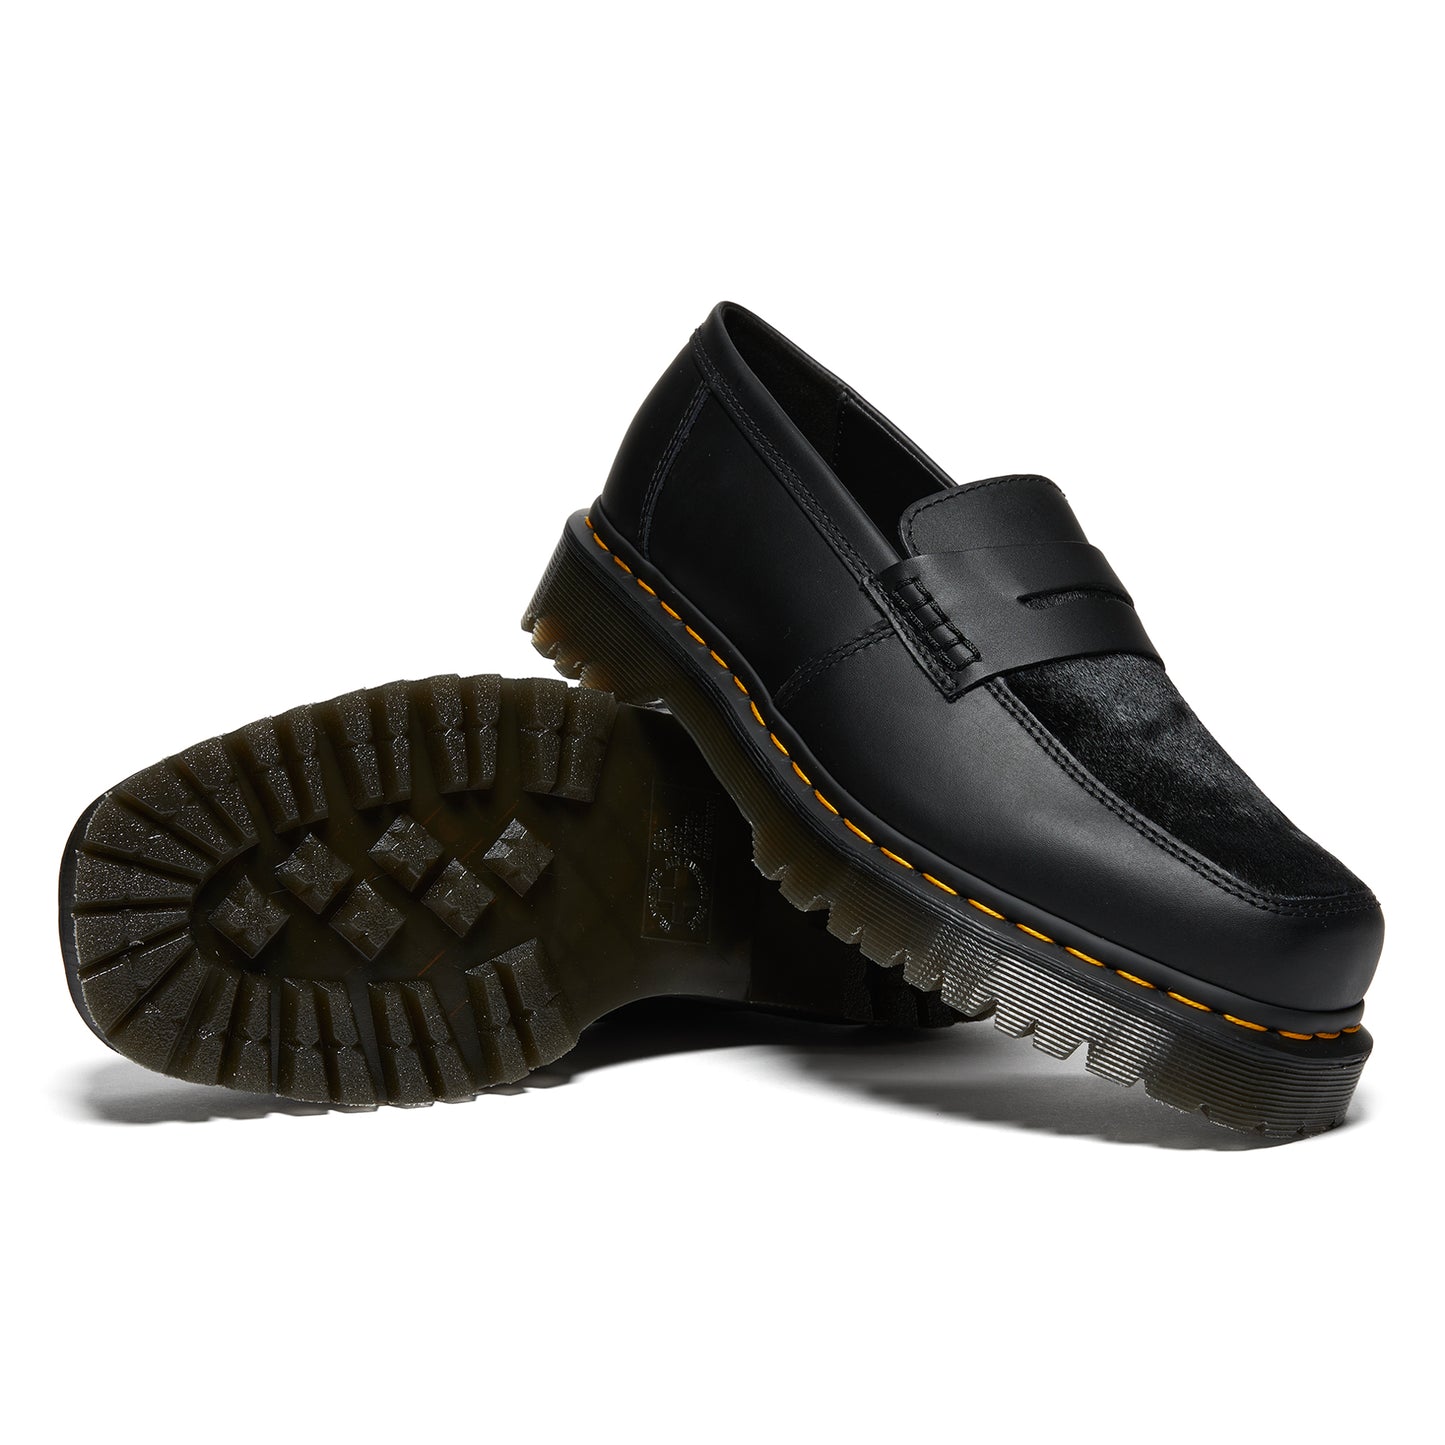 Dr. Martens Penton Bex Squared shoe (Black Danubio/Black Hair On)